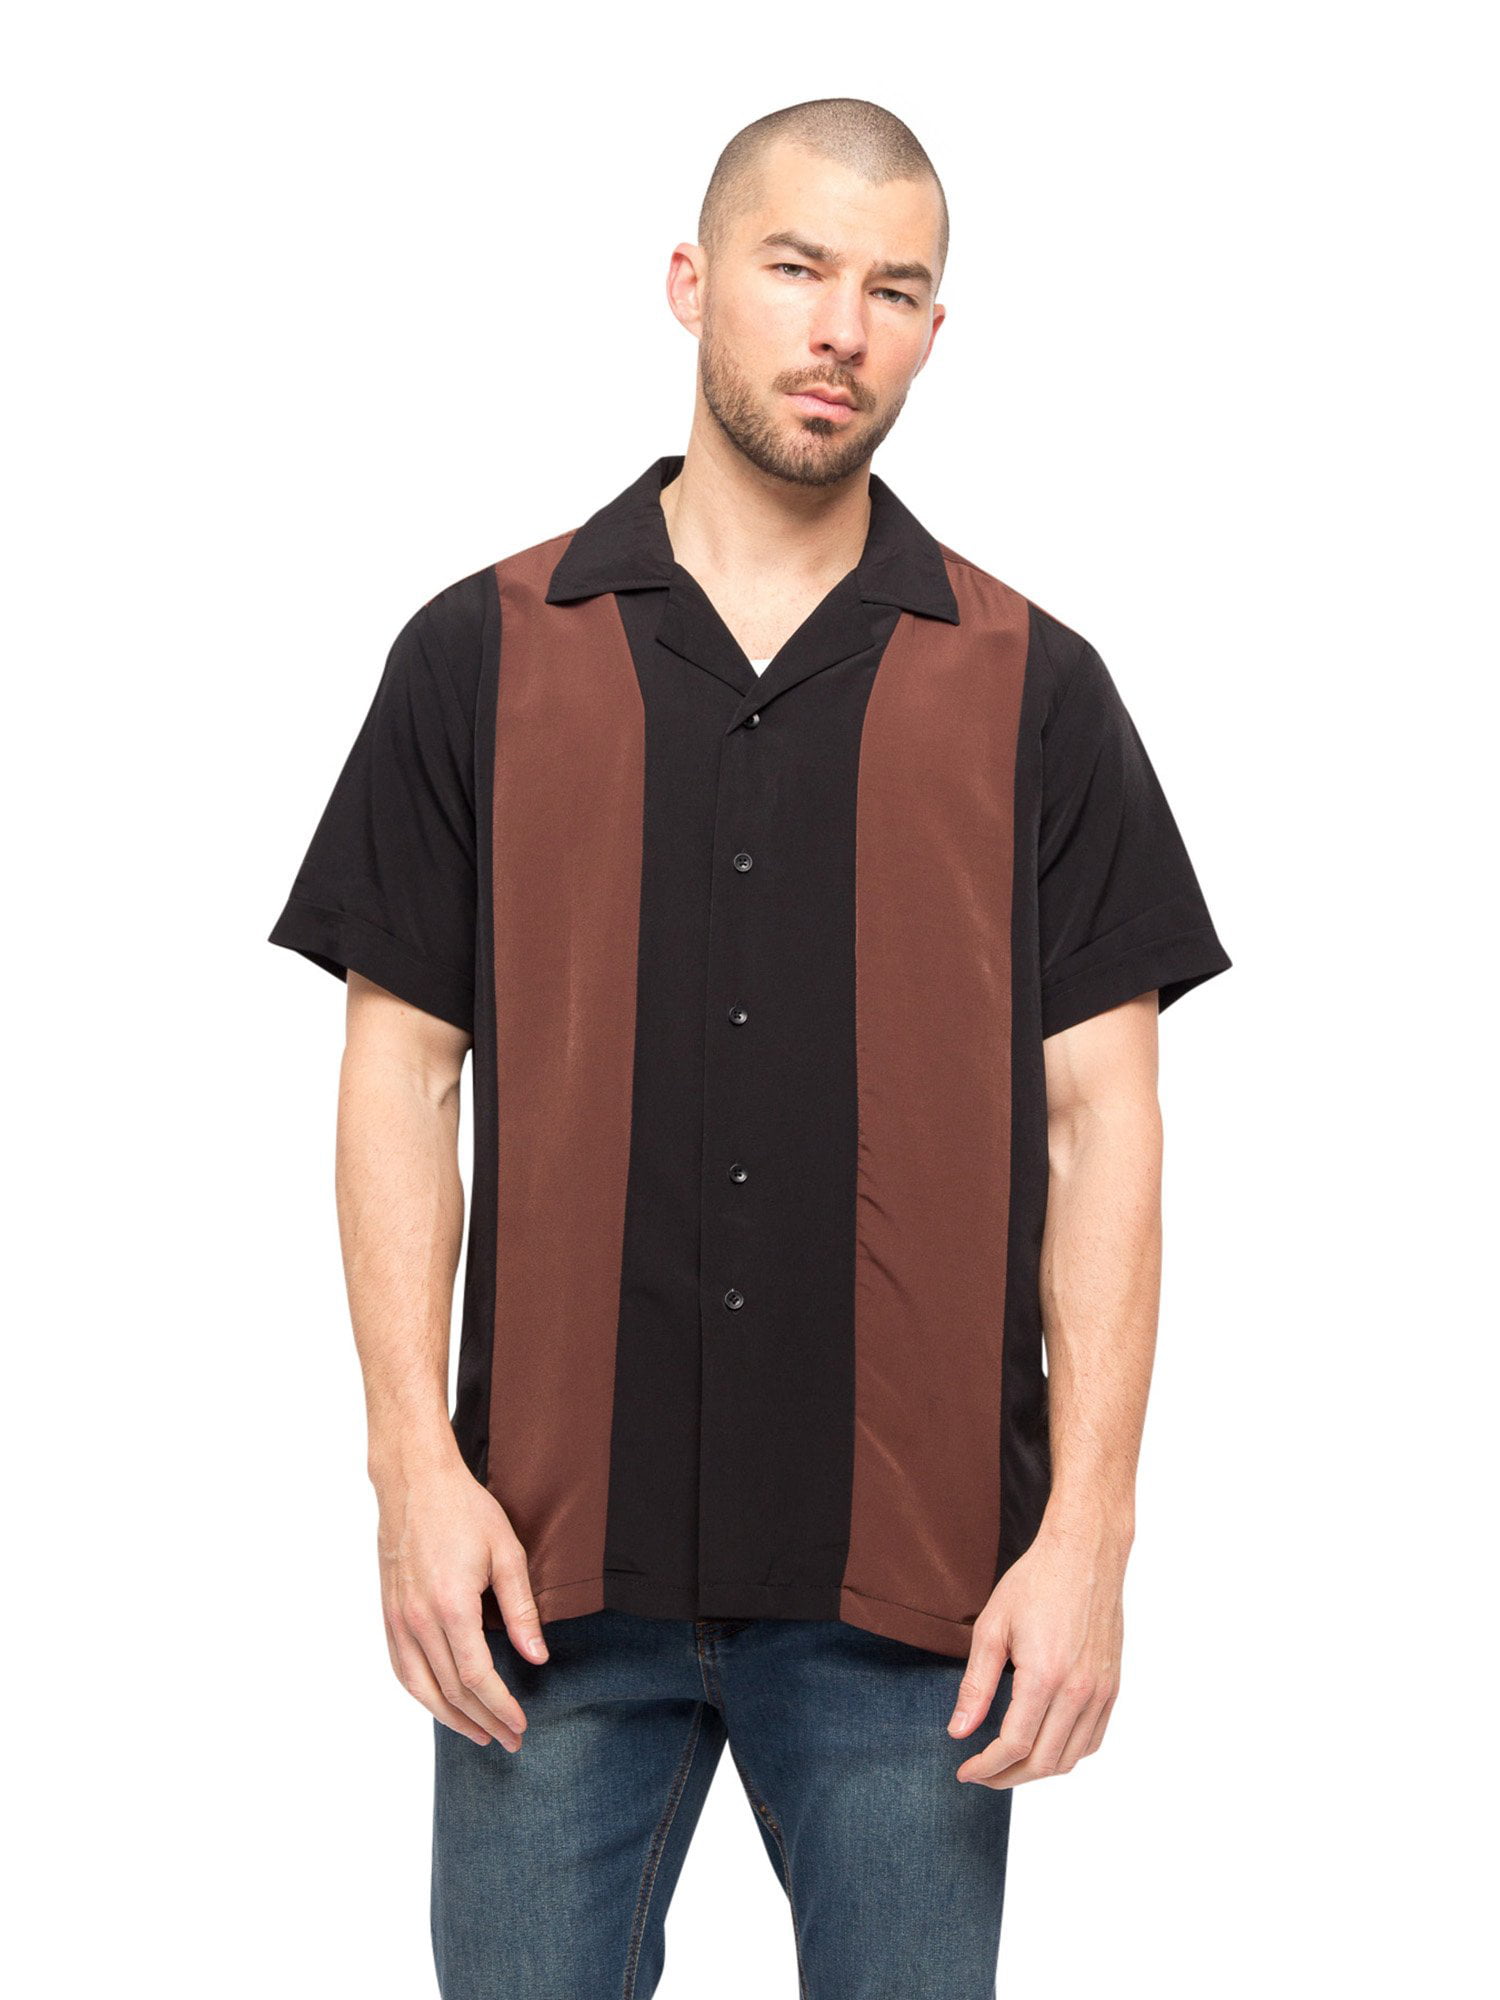 G-Style USA Mens Two Tone Button Up Striped Casual Bowler Guayabera Bowling Shirt 